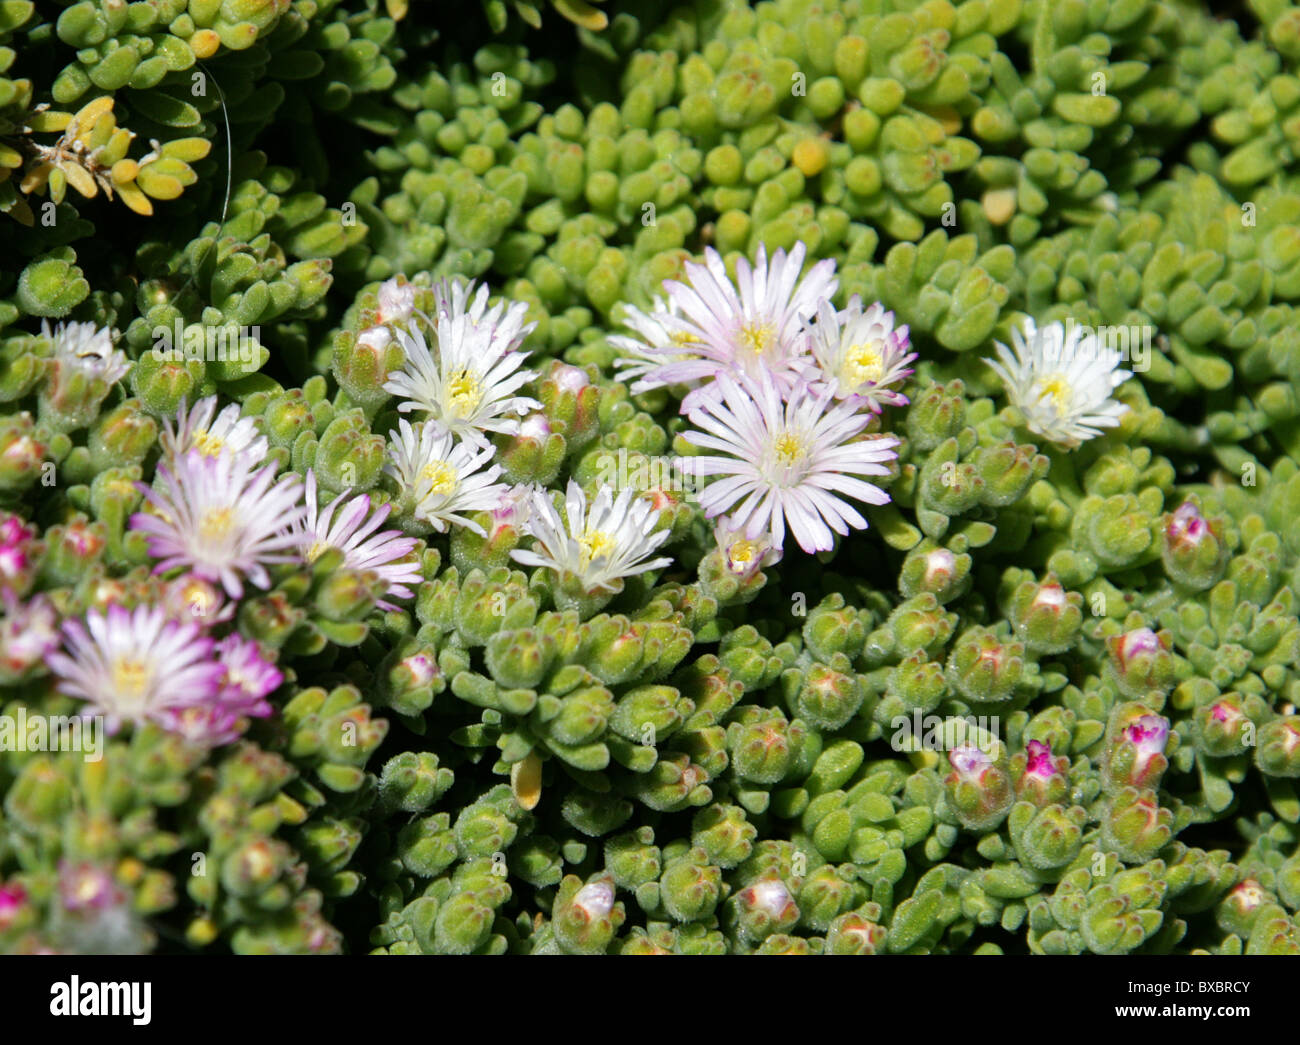 Small Ice Plant, Cape Peninsular, South Africa. Probably Showy Dewflower or Ice Plant, Drosanthemum floribundum, Aizoaceae. Stock Photo